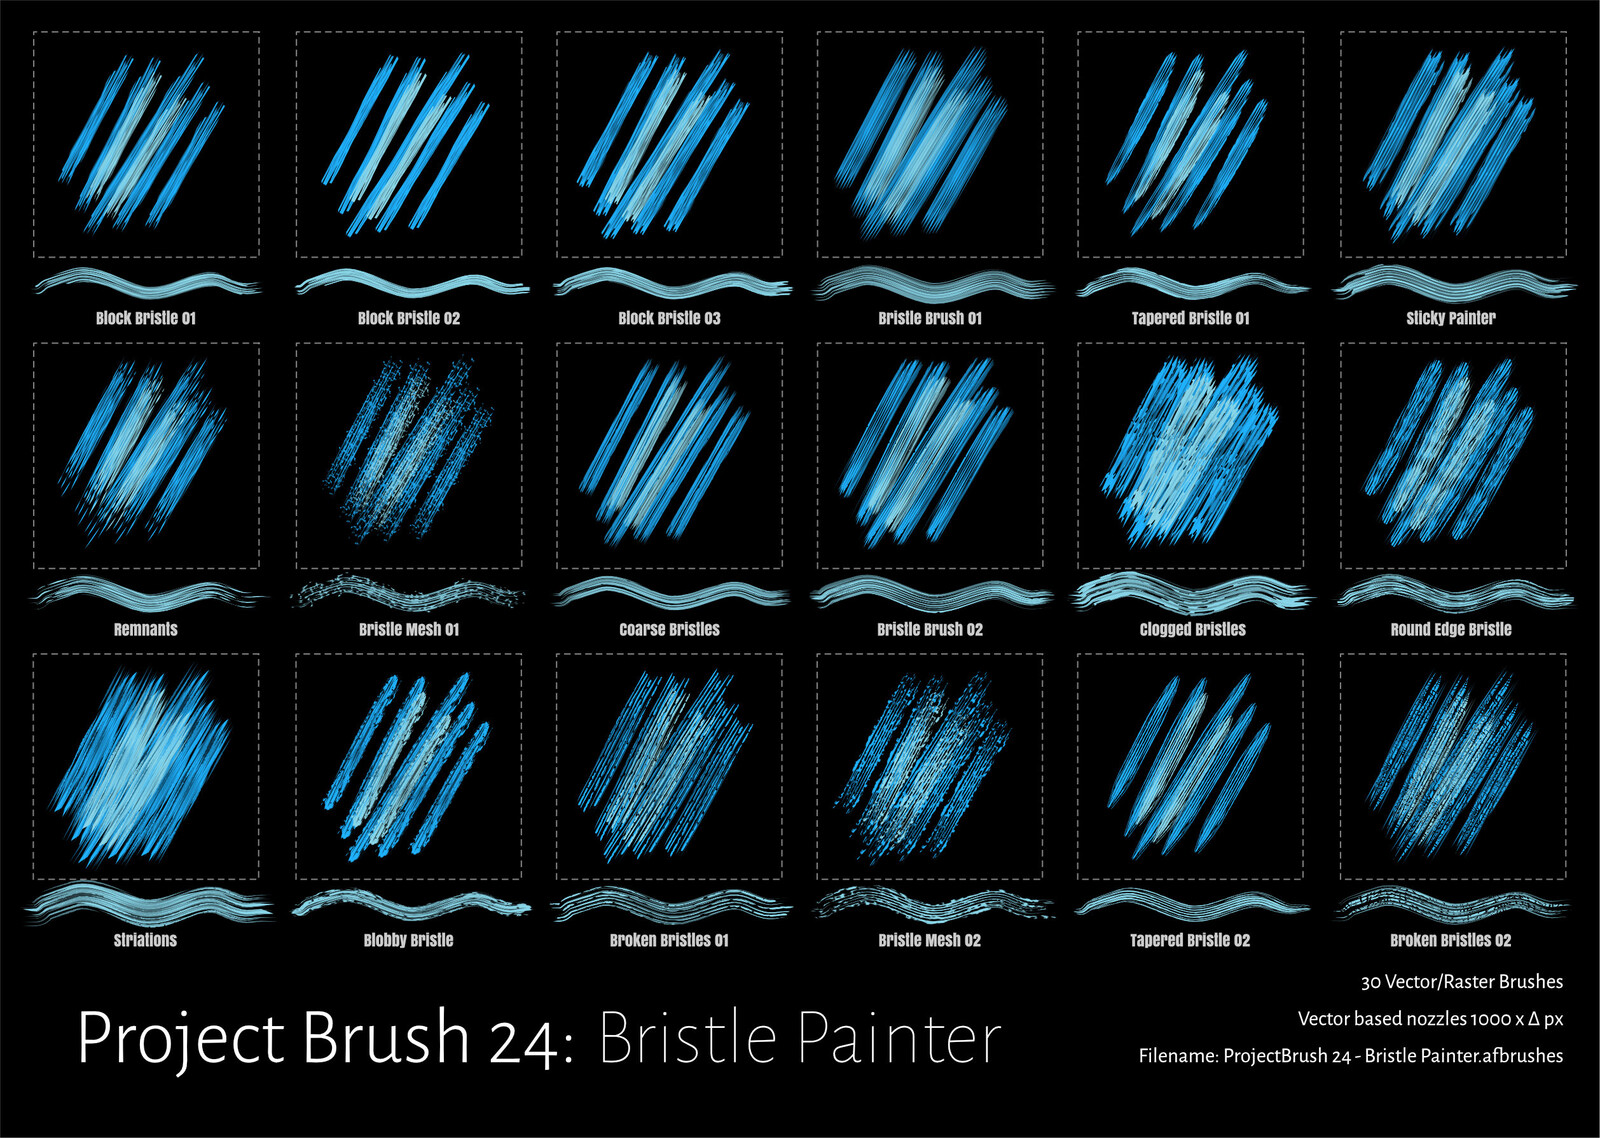 Project Brush 24 01
Bristle Painter